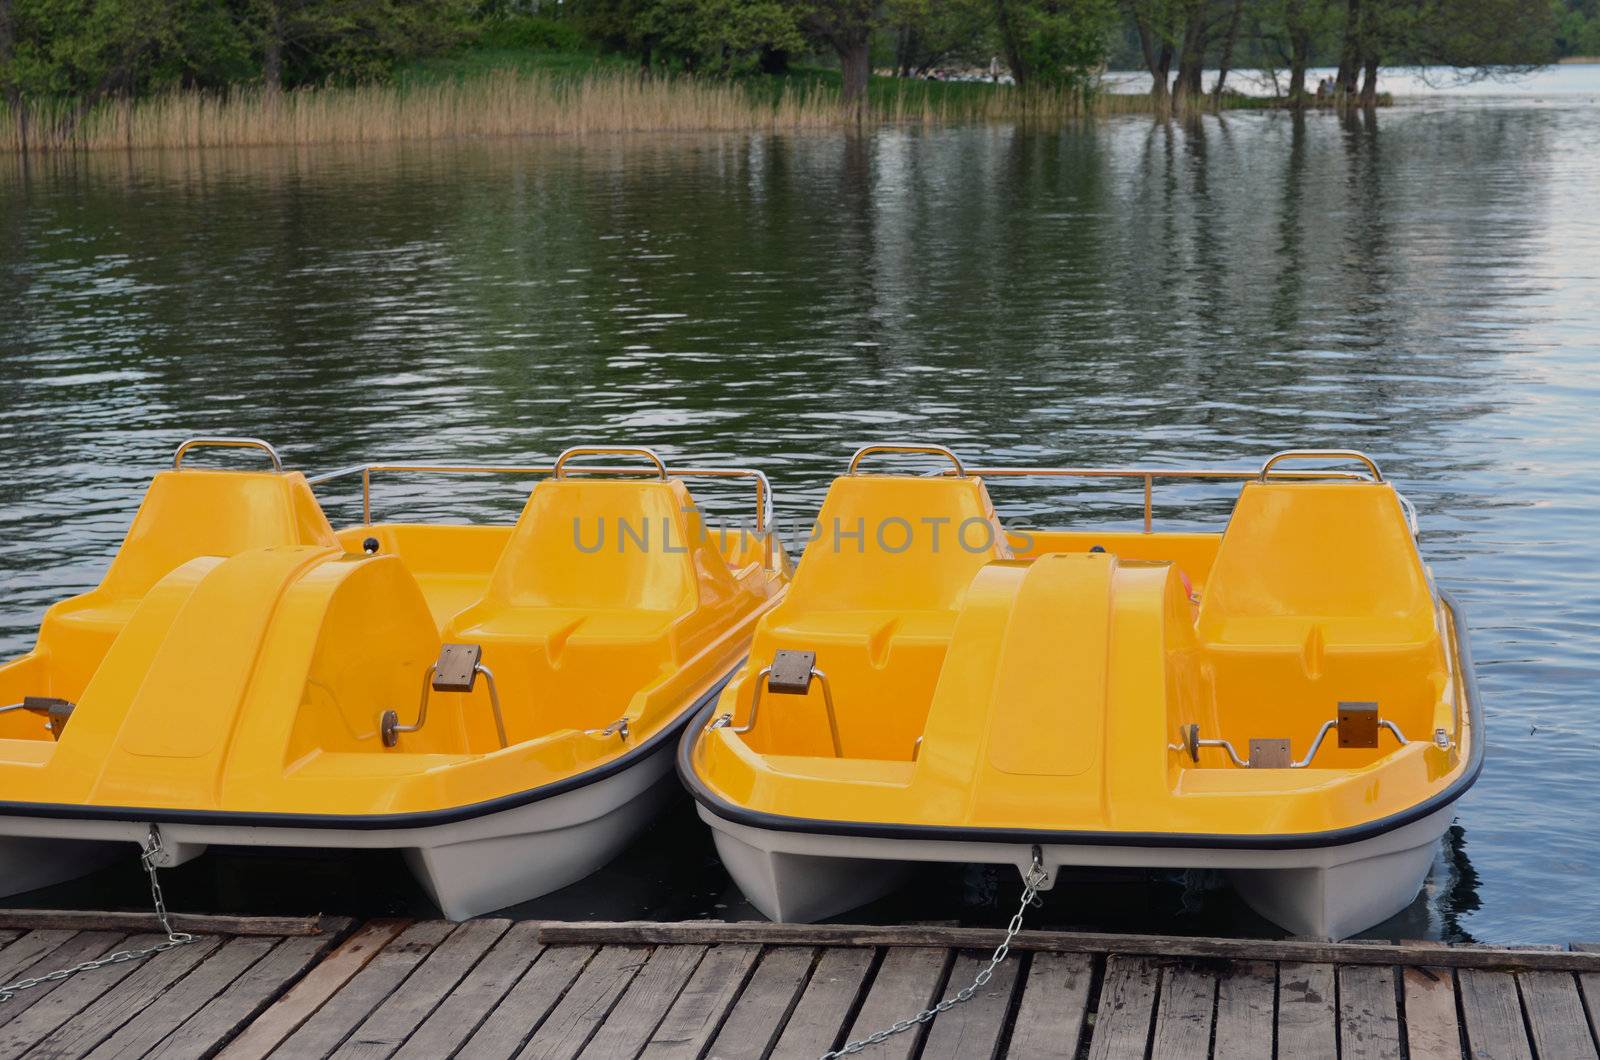 Yellow water bicycles locked at lake marina. Active recreation objects.